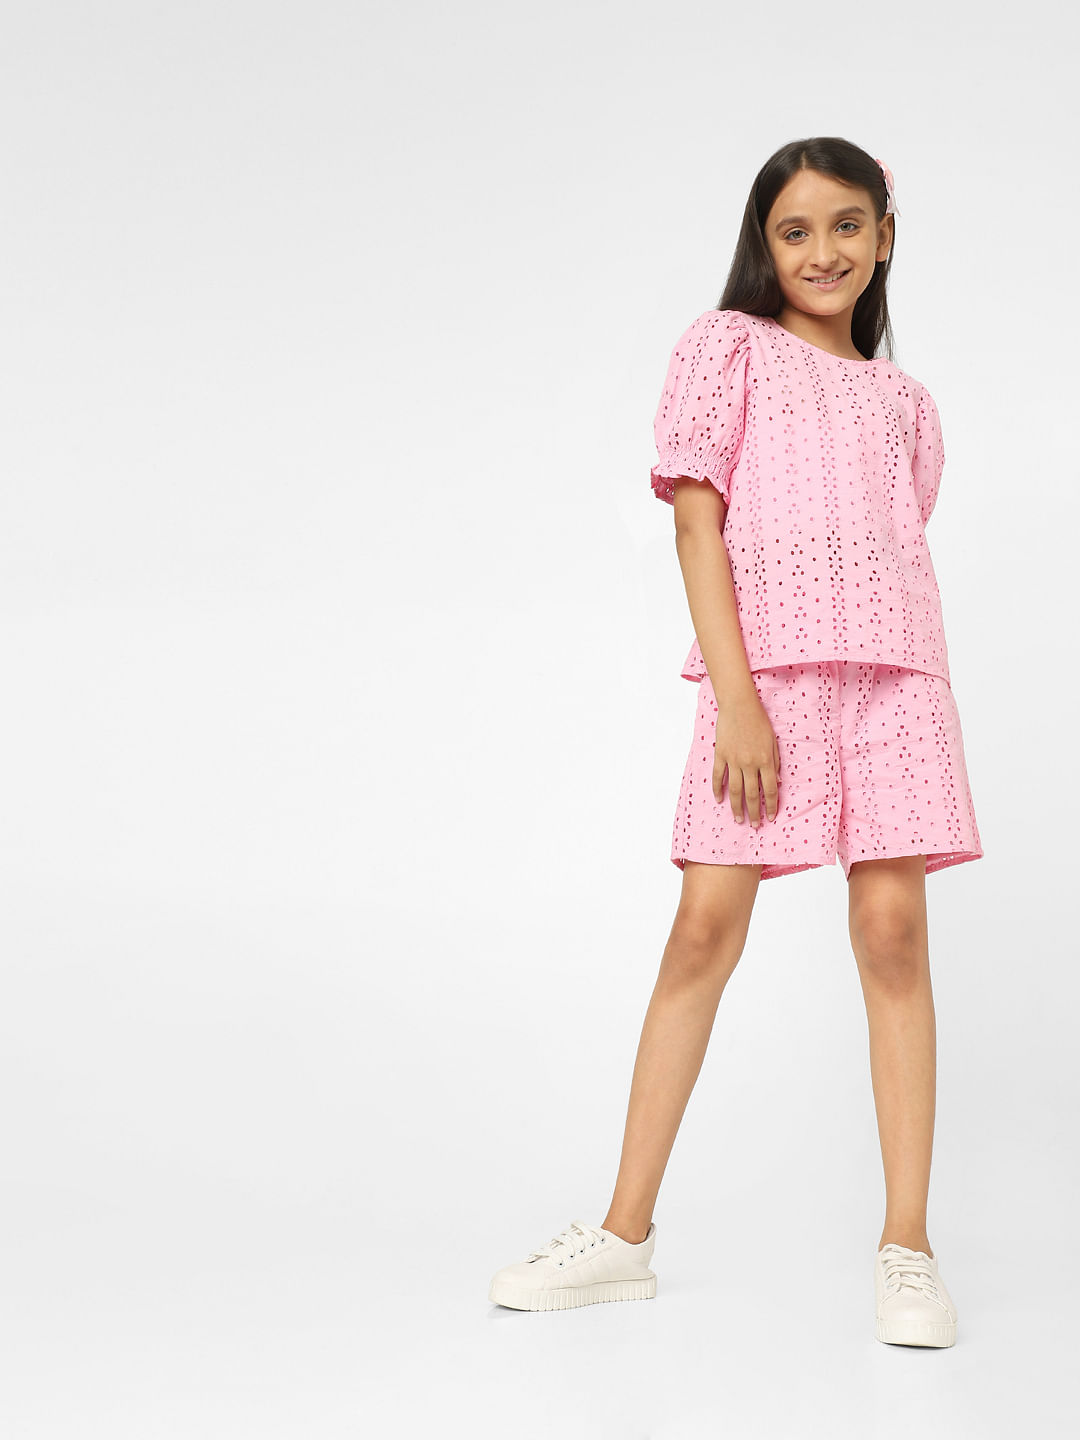 COREFAB Cotton Lycra Shorts for Women Under Dress. - Daraz India